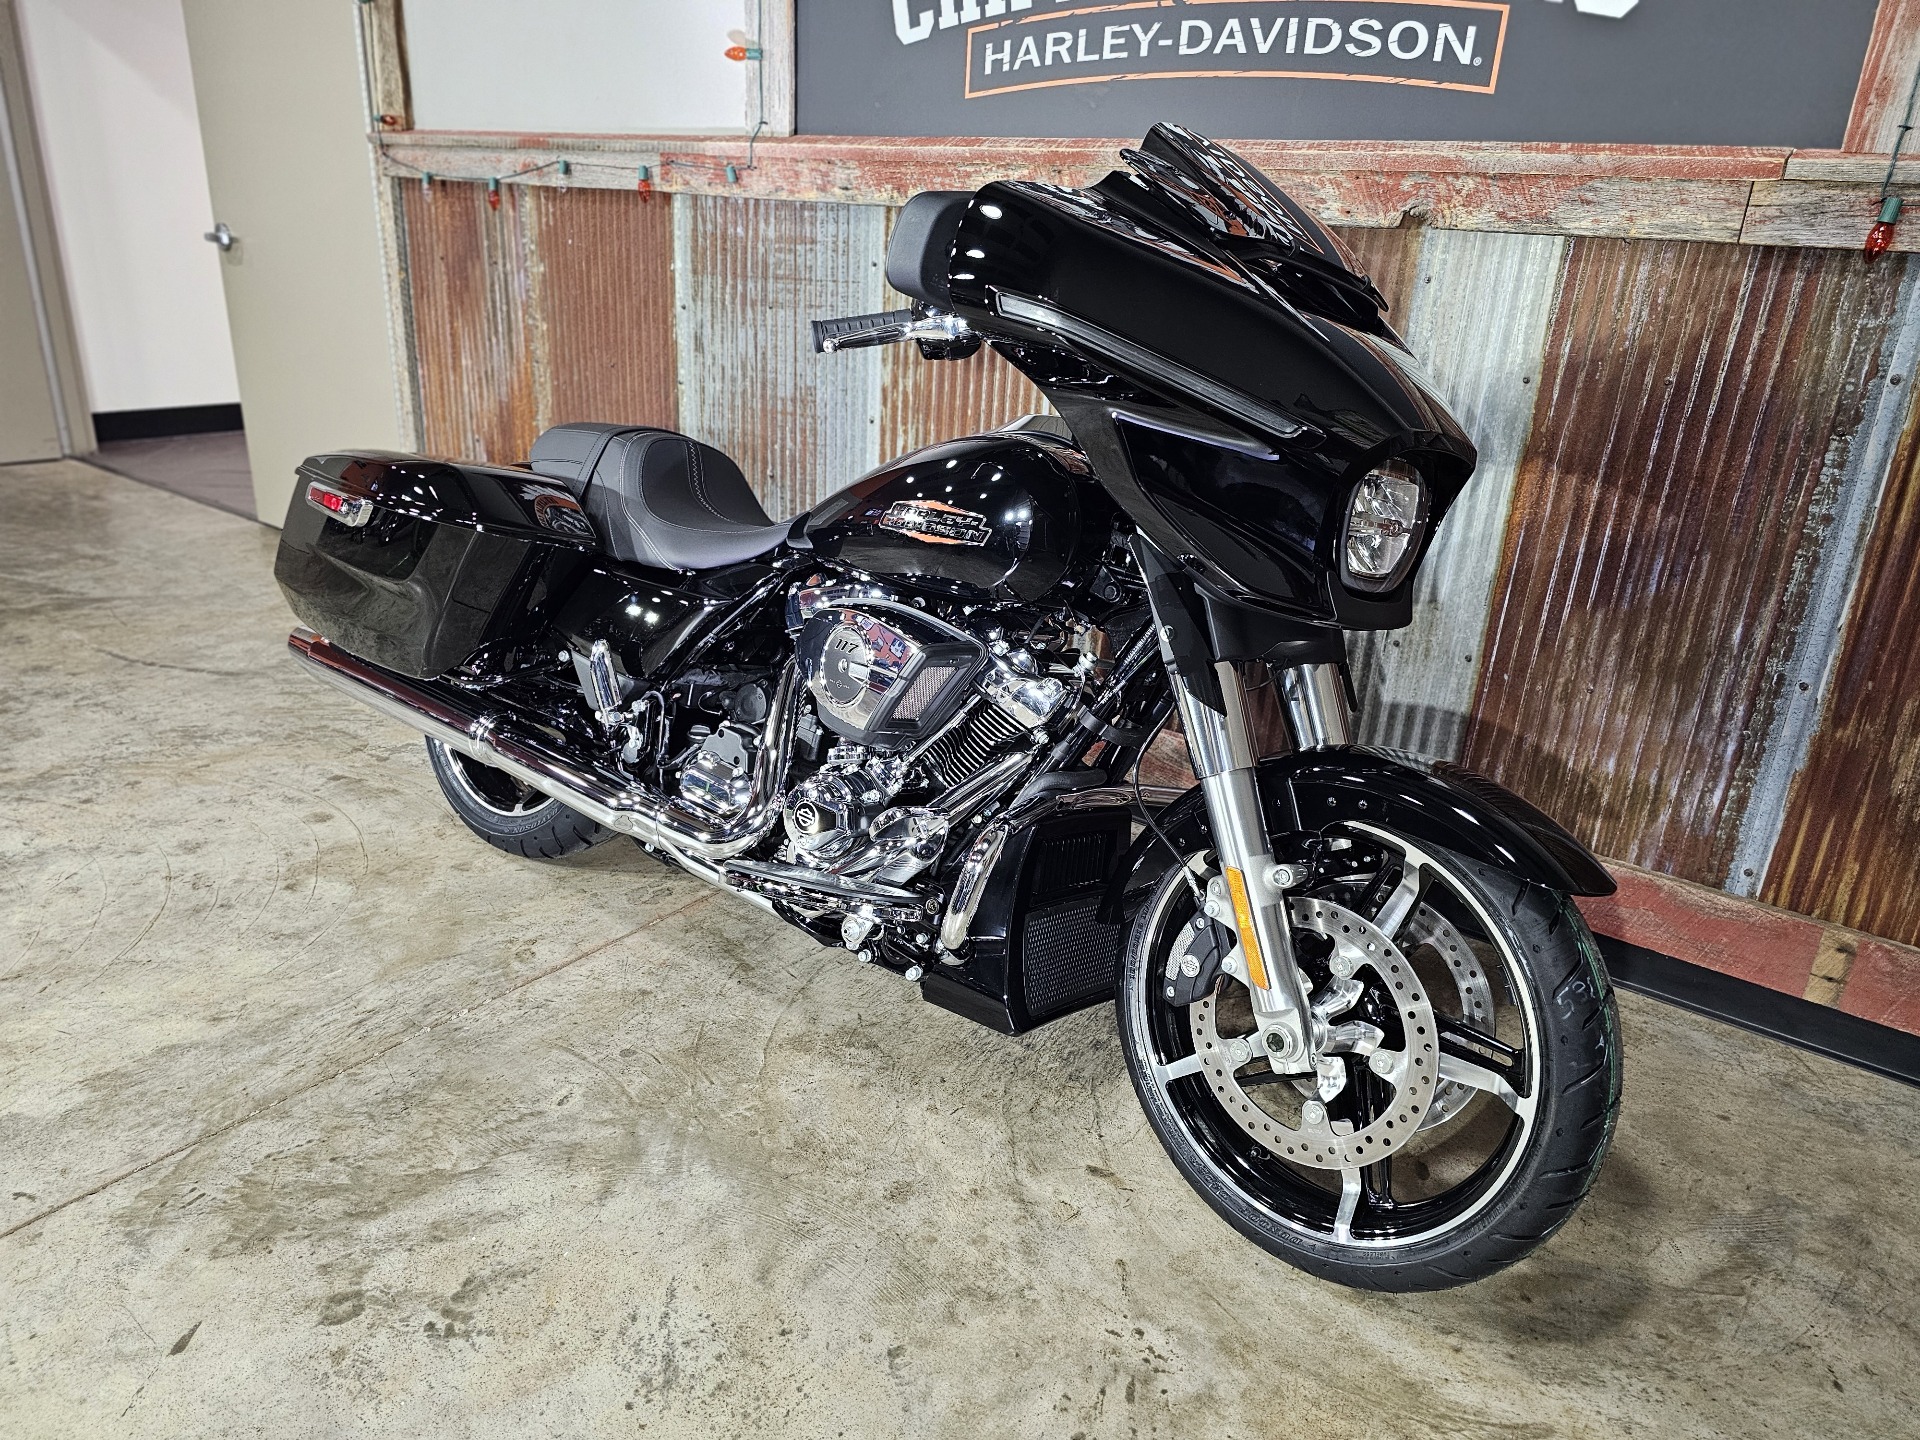 2024 Harley-Davidson Street Glide® in Chippewa Falls, Wisconsin - Photo 4